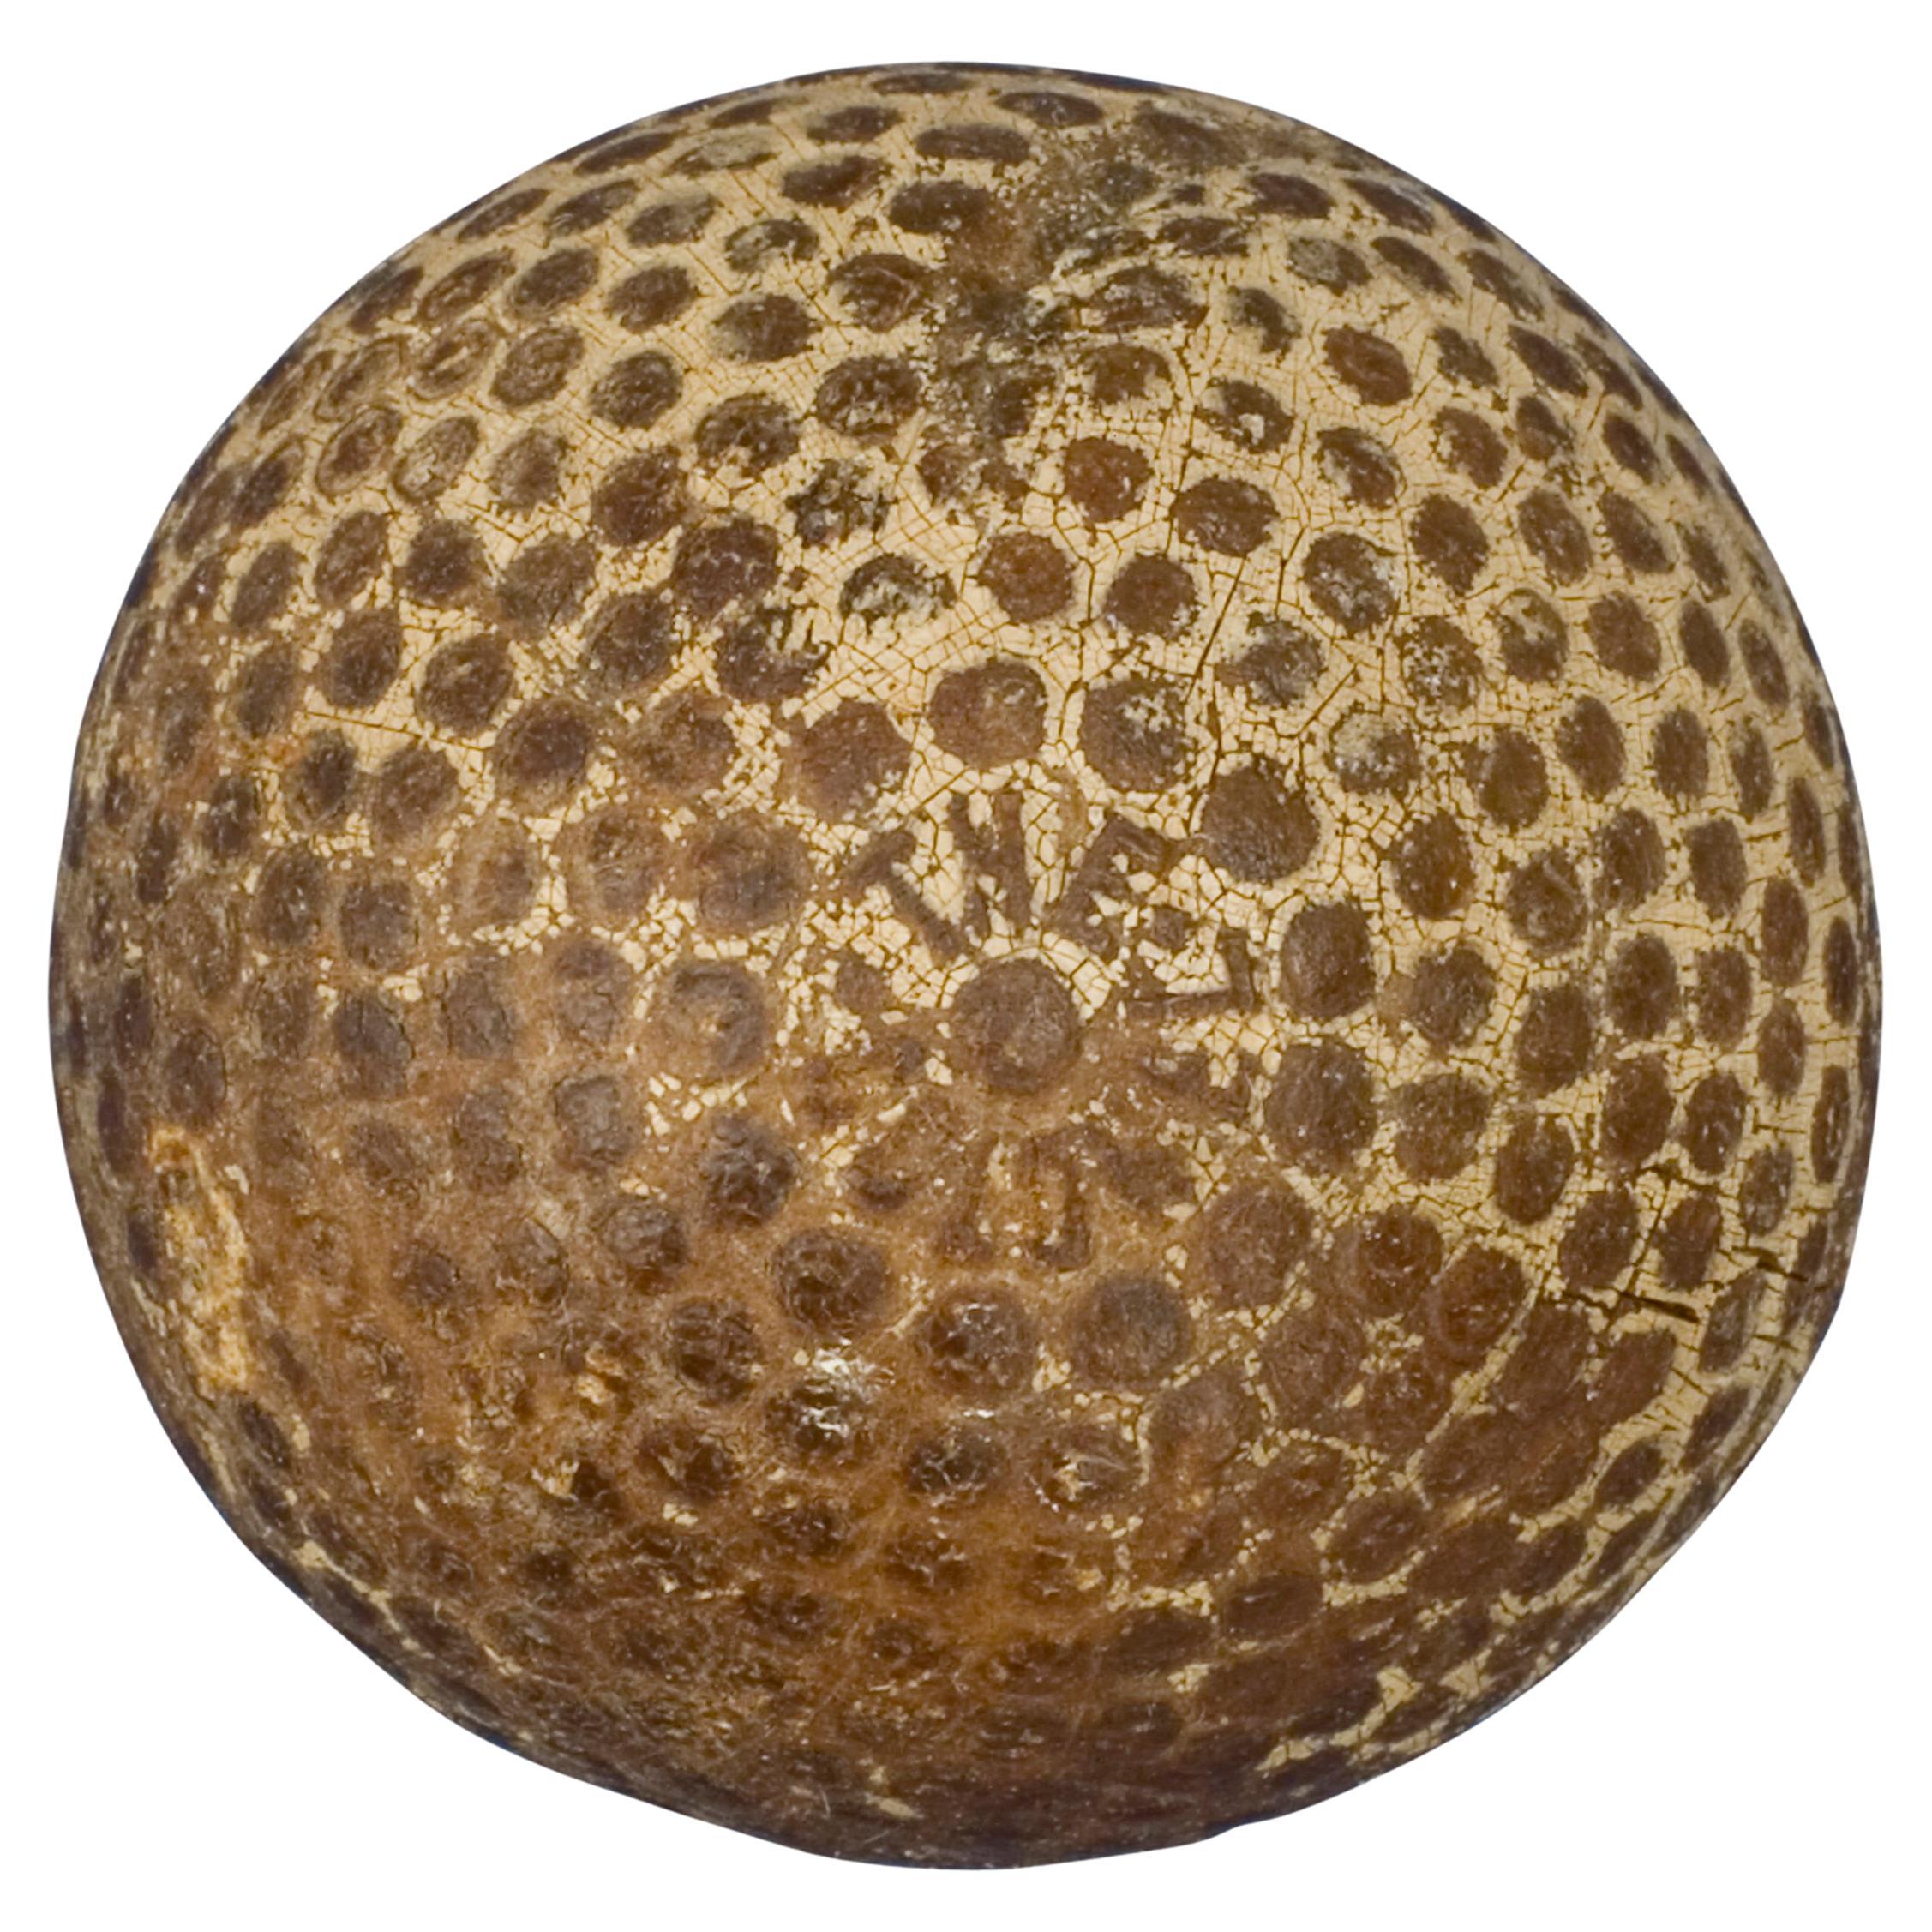 Antiker Golfball mit Bramble-Muster, Colonel